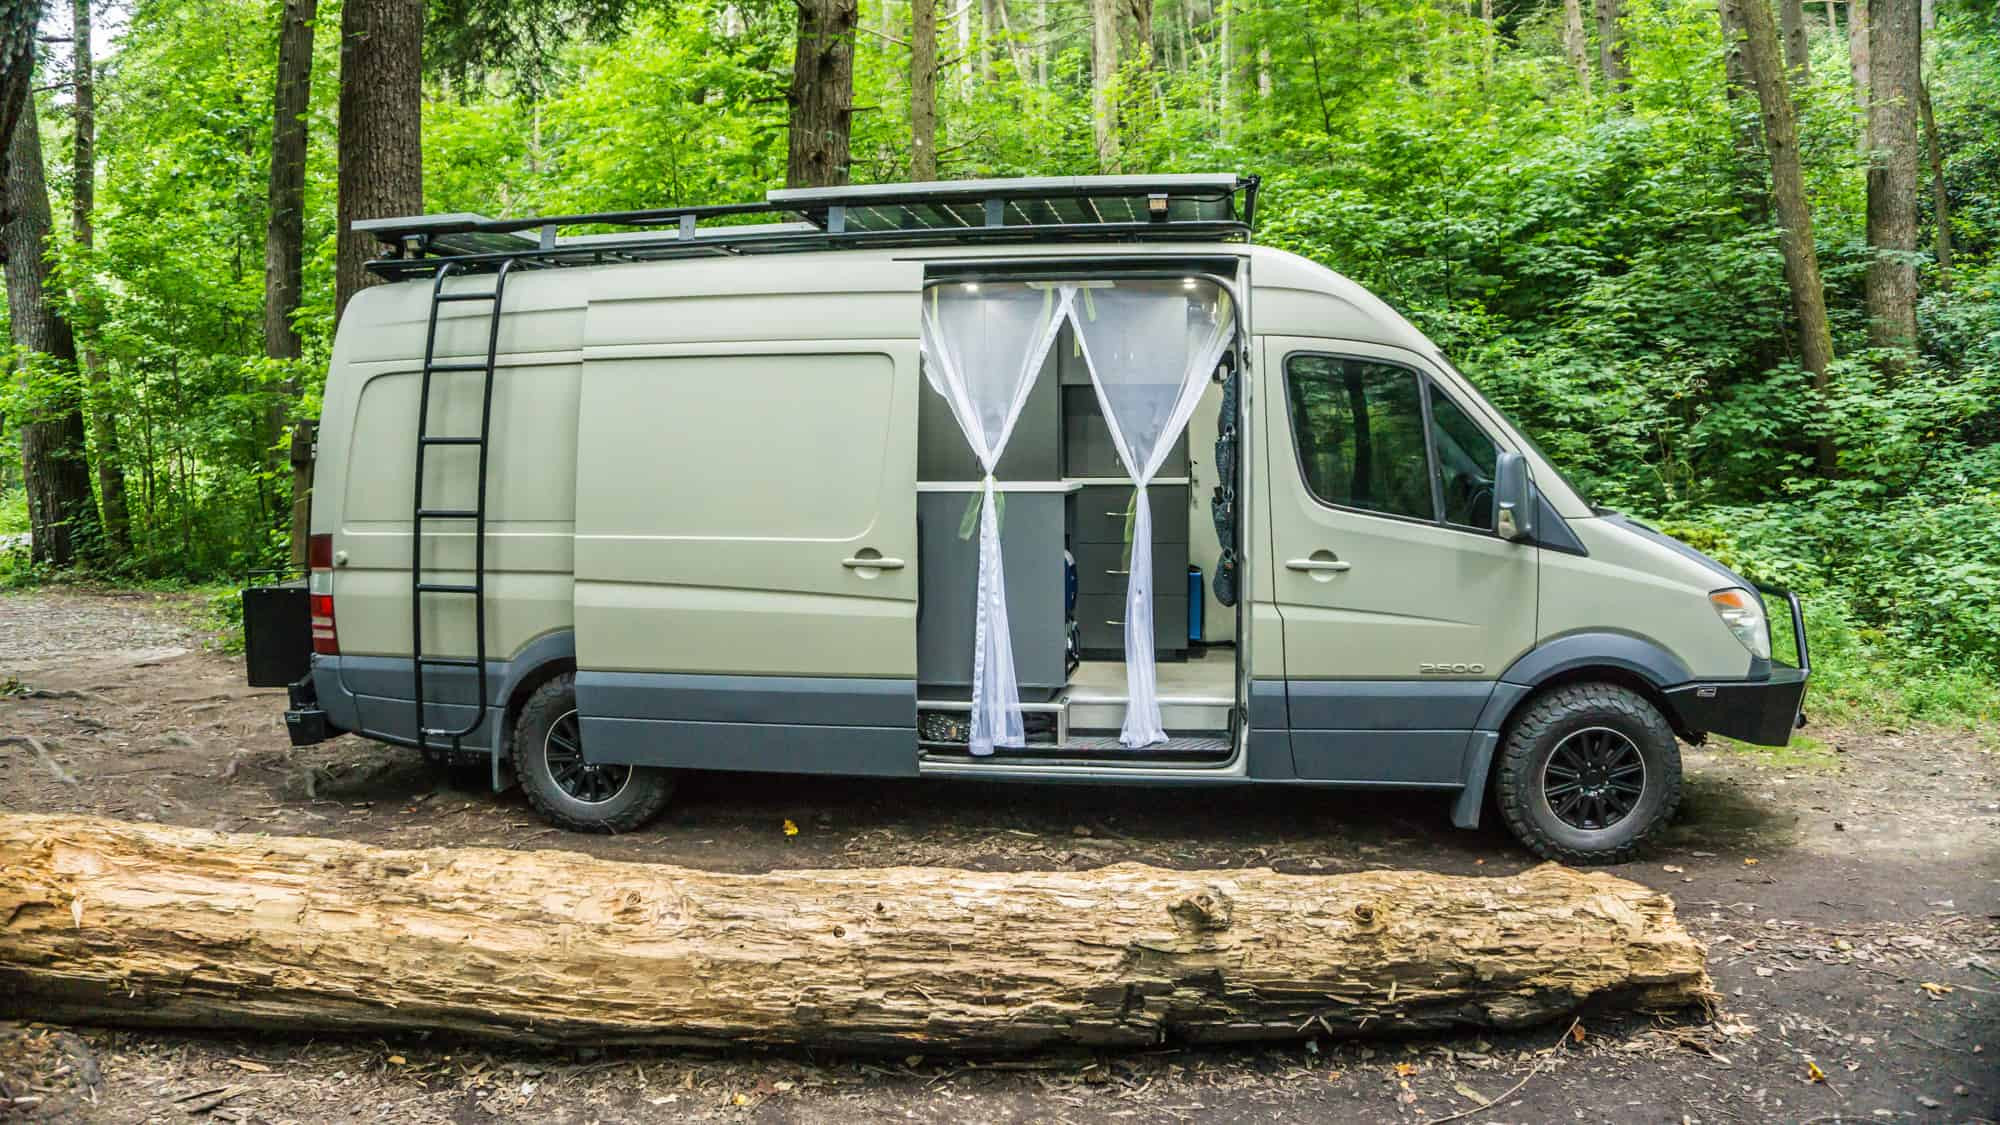 Best ideas about DIY Camper Van
. Save or Pin Our plete DIY Campervan Conversion Adventure in a Now.